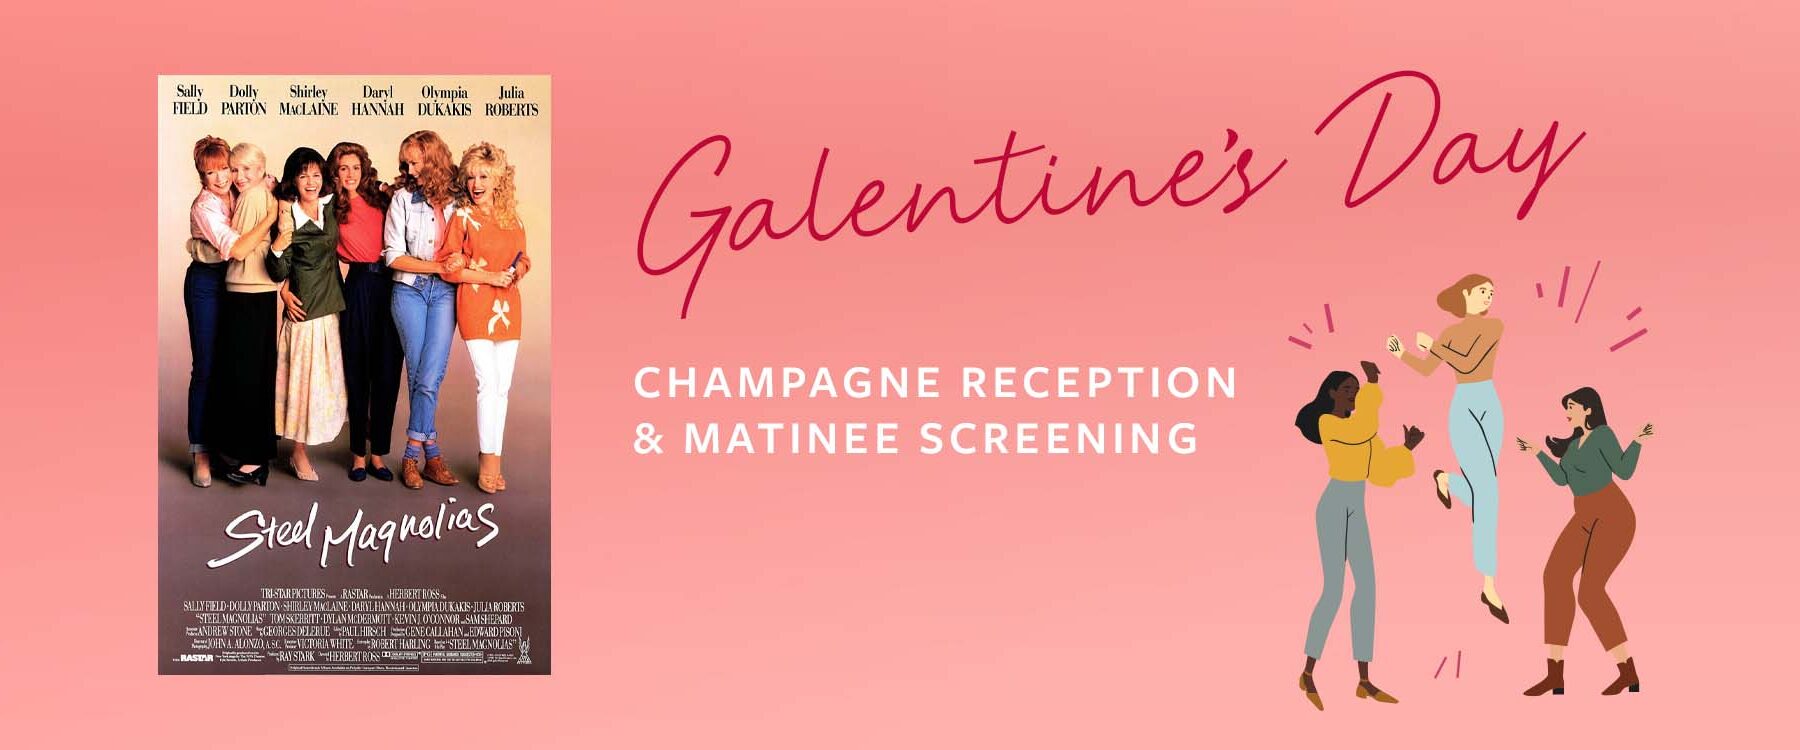 Galentine's Day Champagne Reception & Matinee Screening